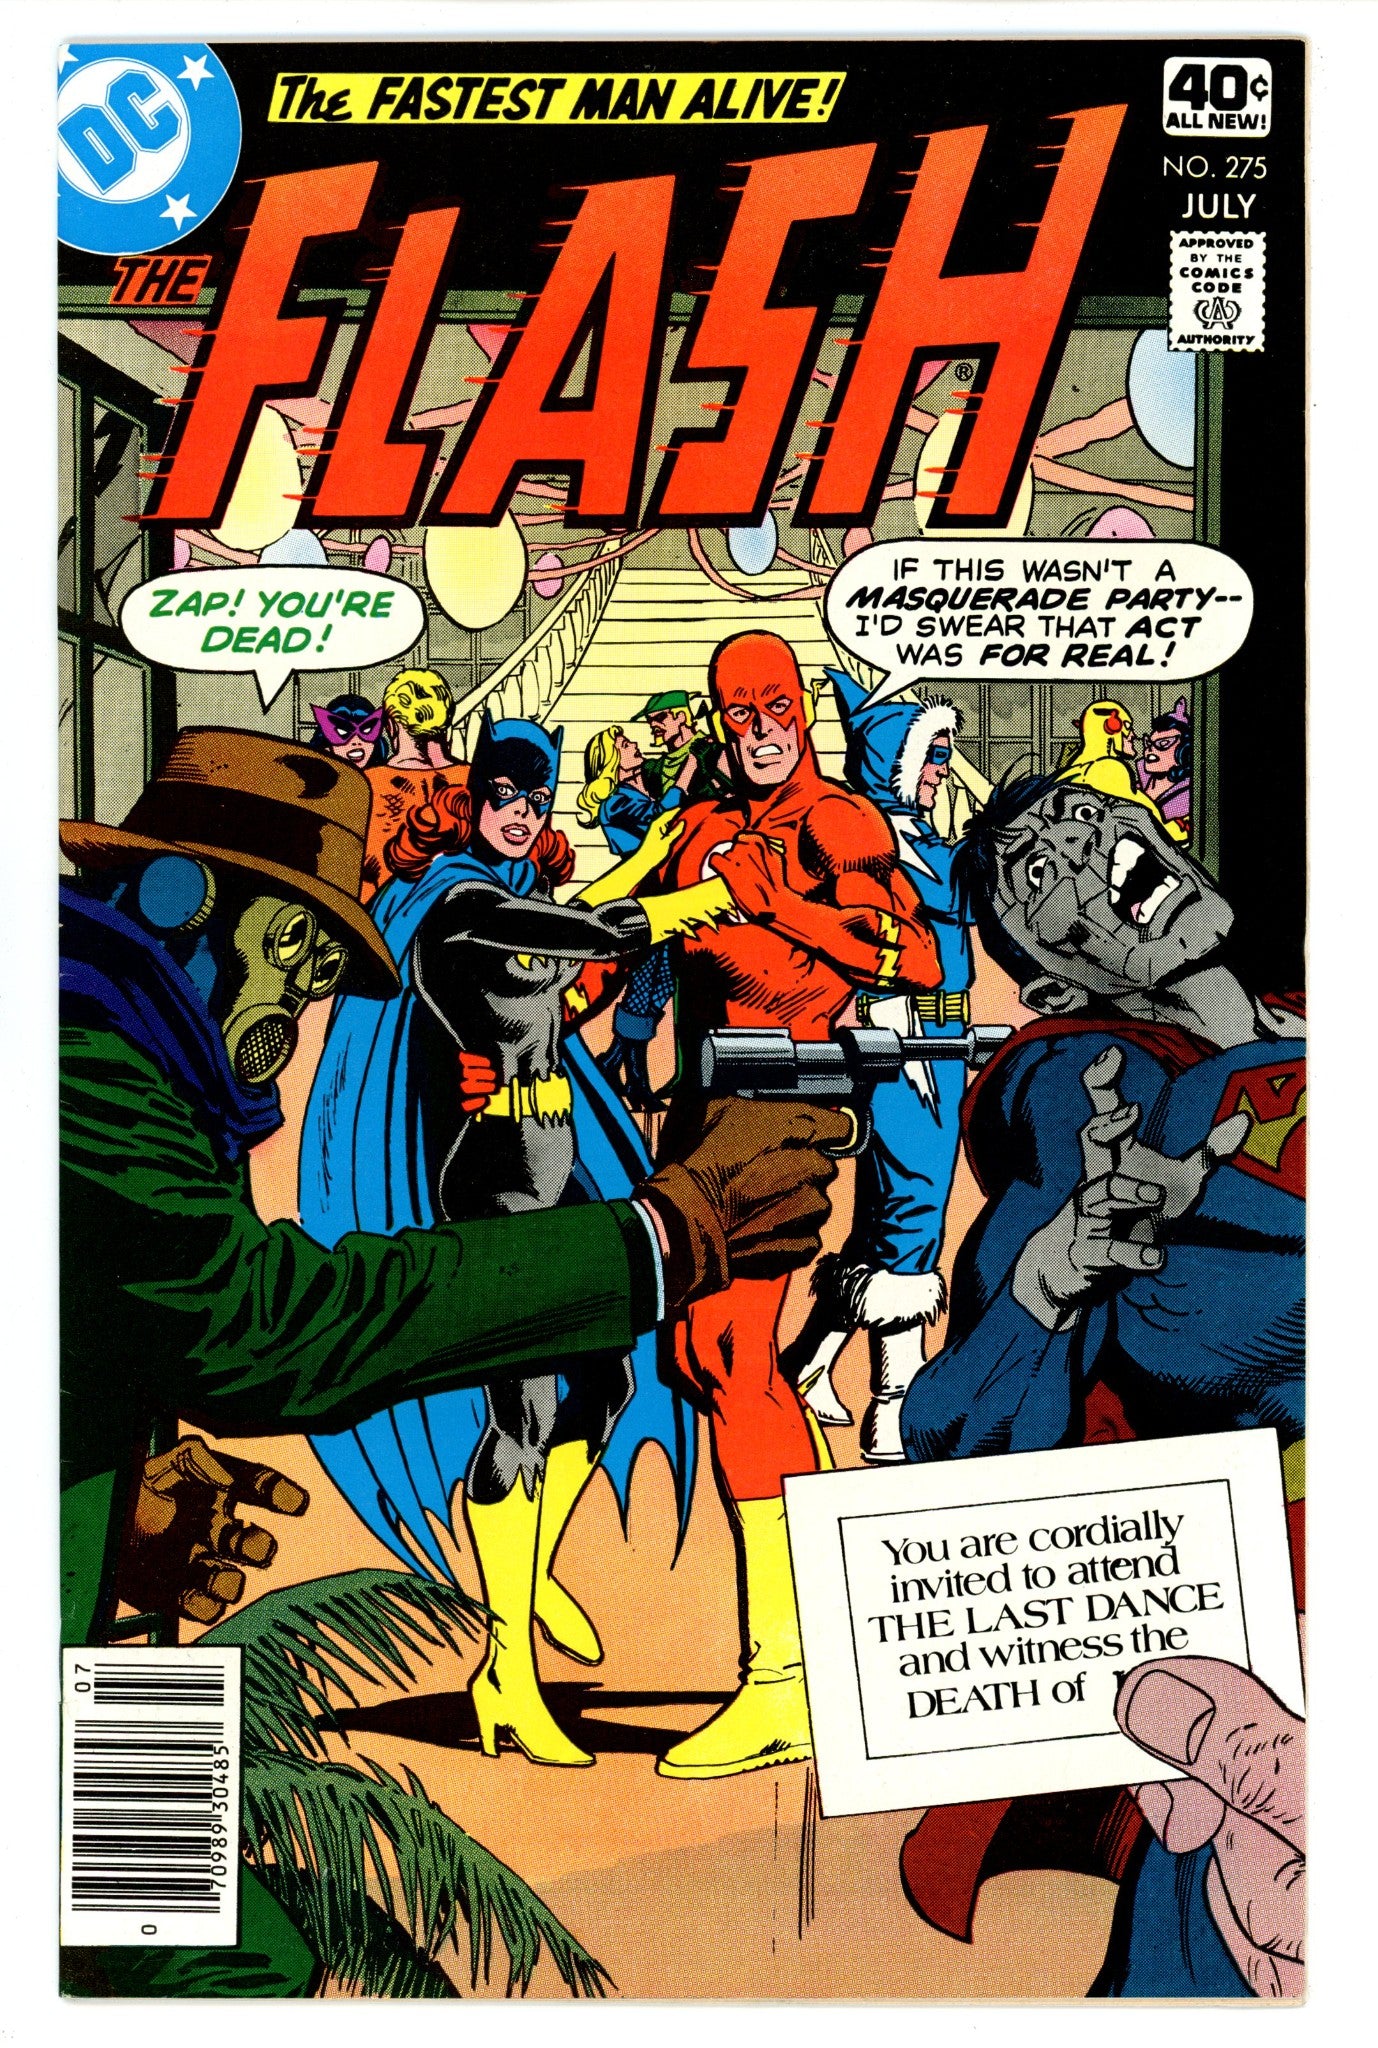 The Flash Vol 1 275 FN/VF (7.0) (1979) 